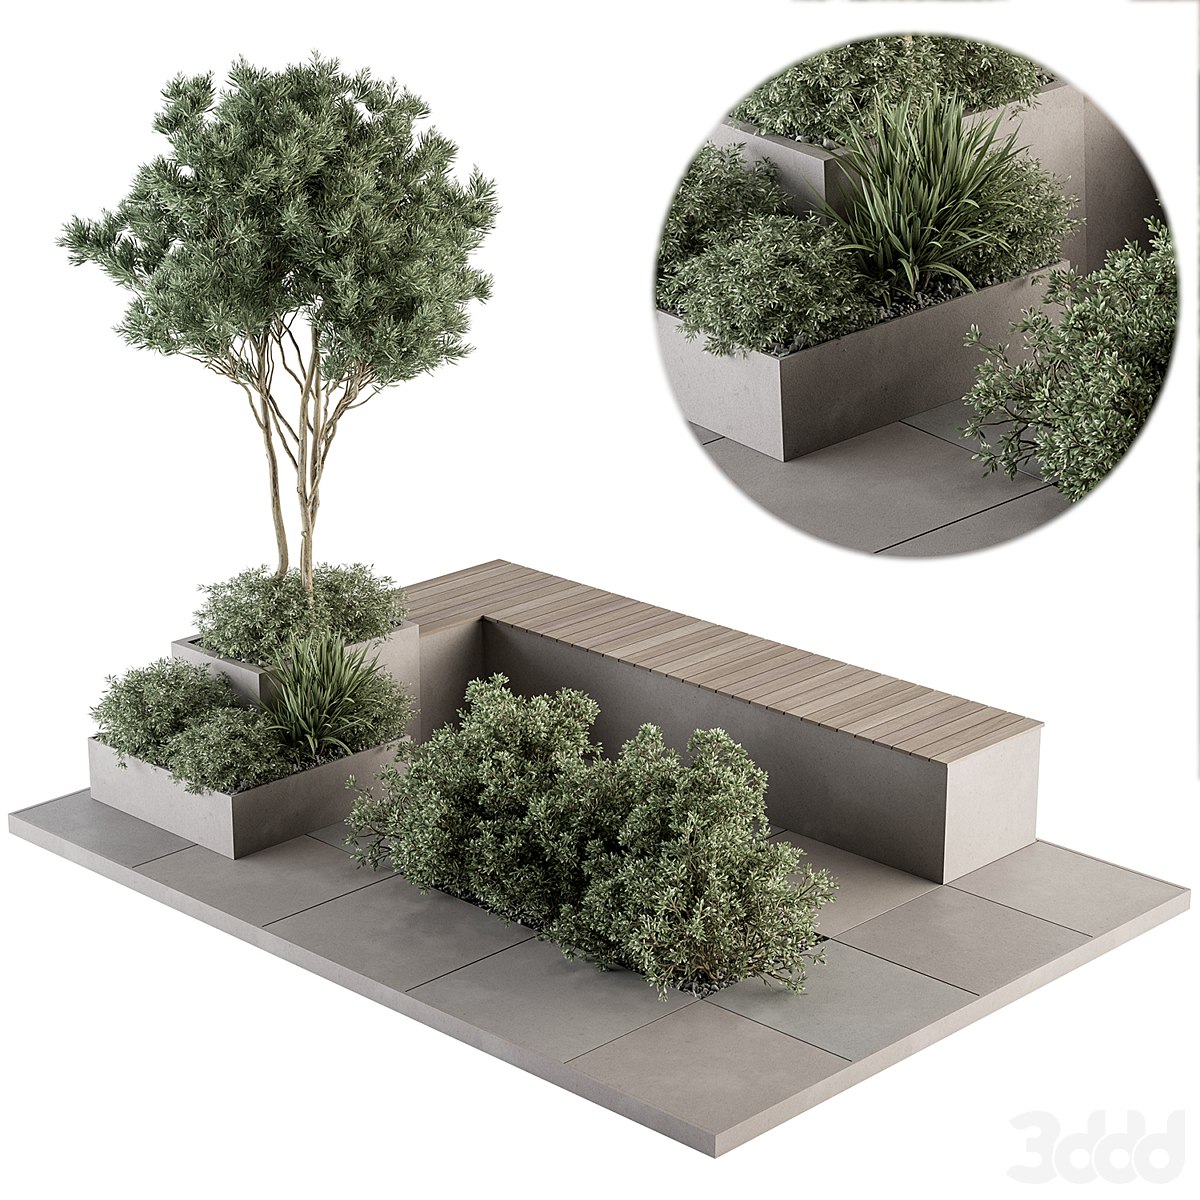 Urban Furniture / Architecture Bench with Garden Plants- Set 35